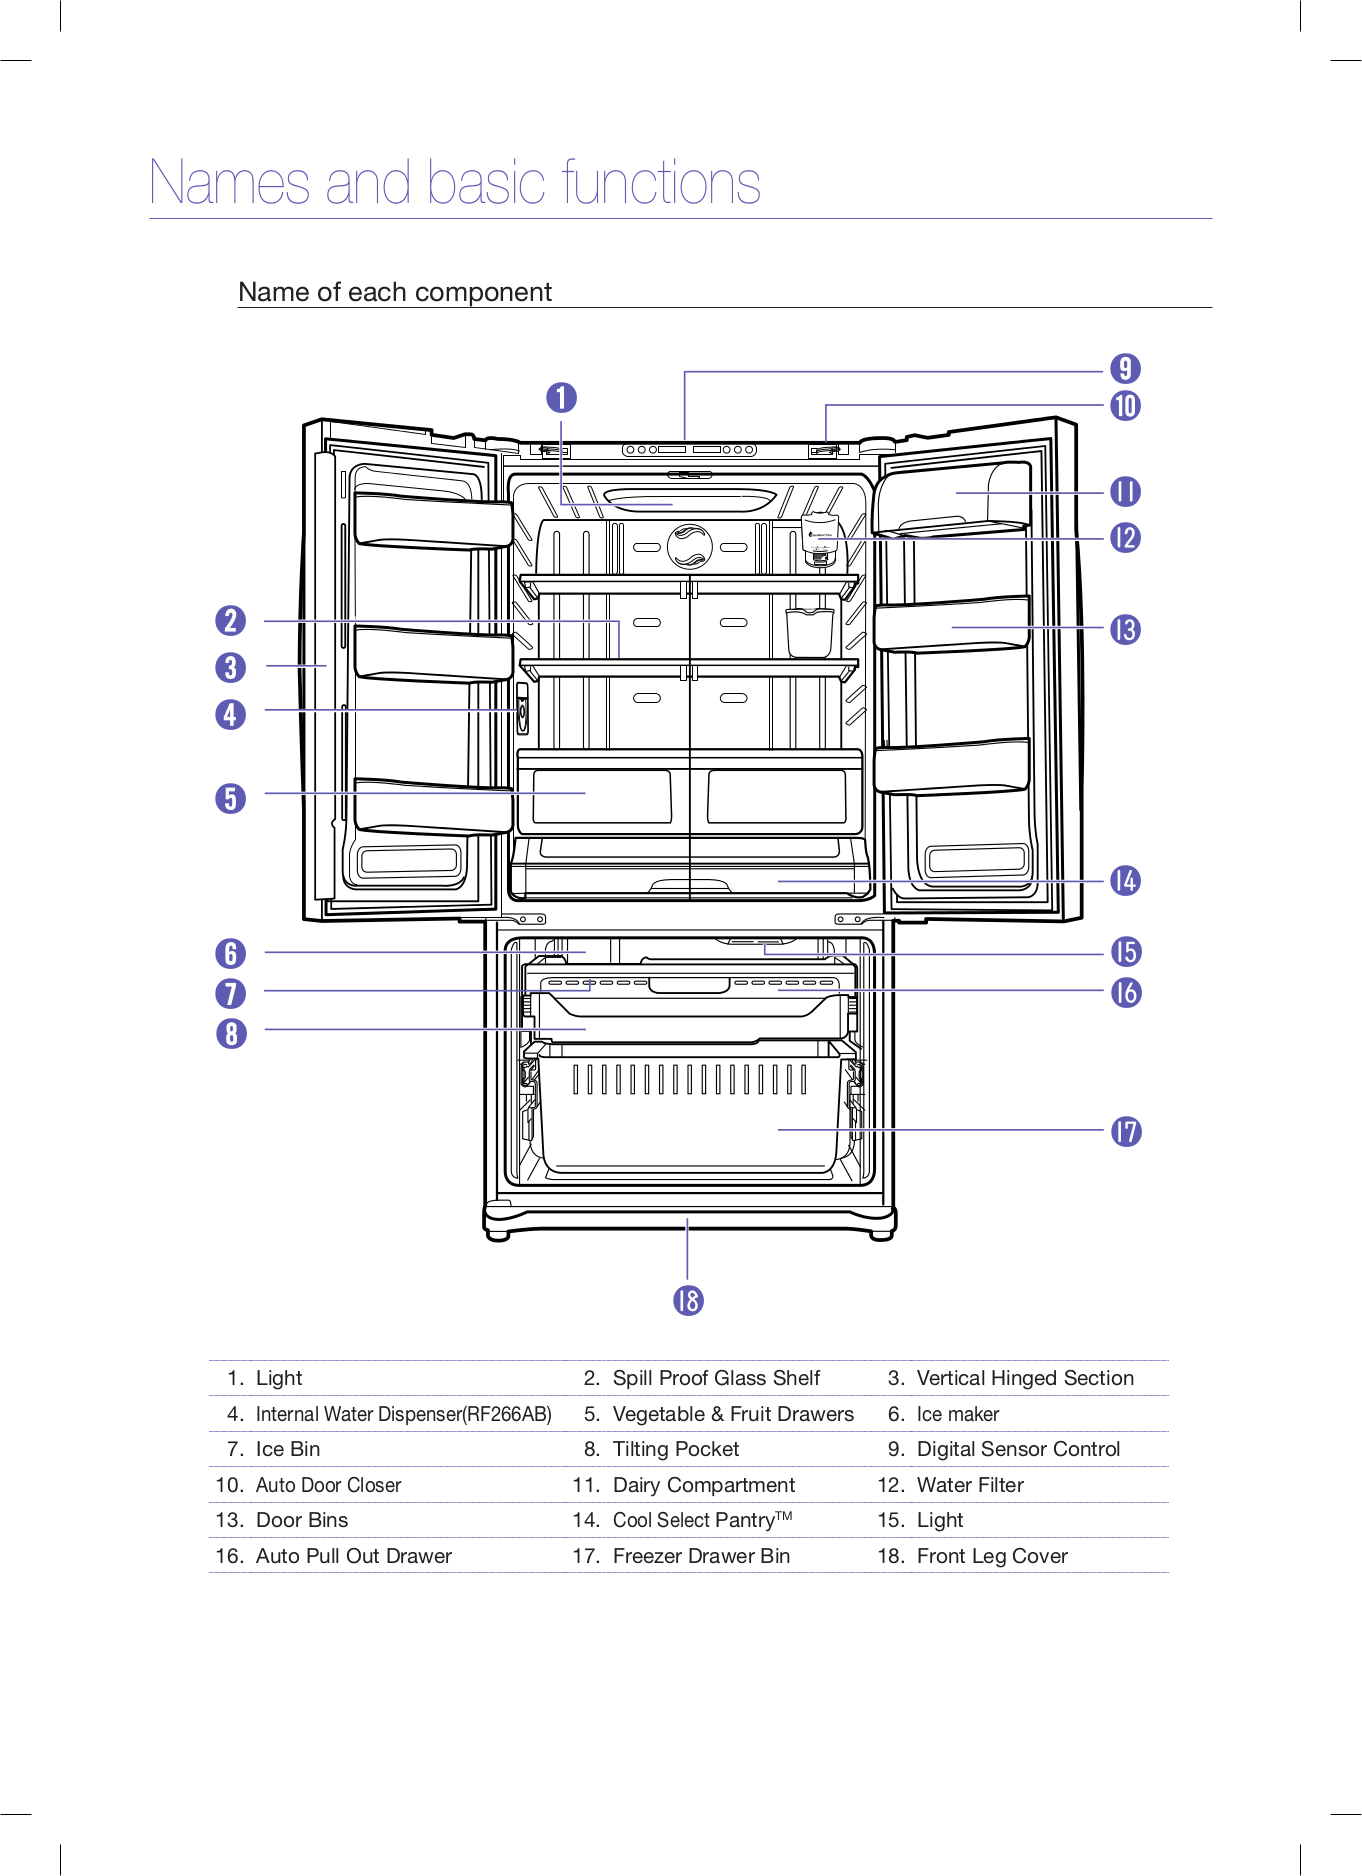 Samsung Rs277 Refrigerator User Manual